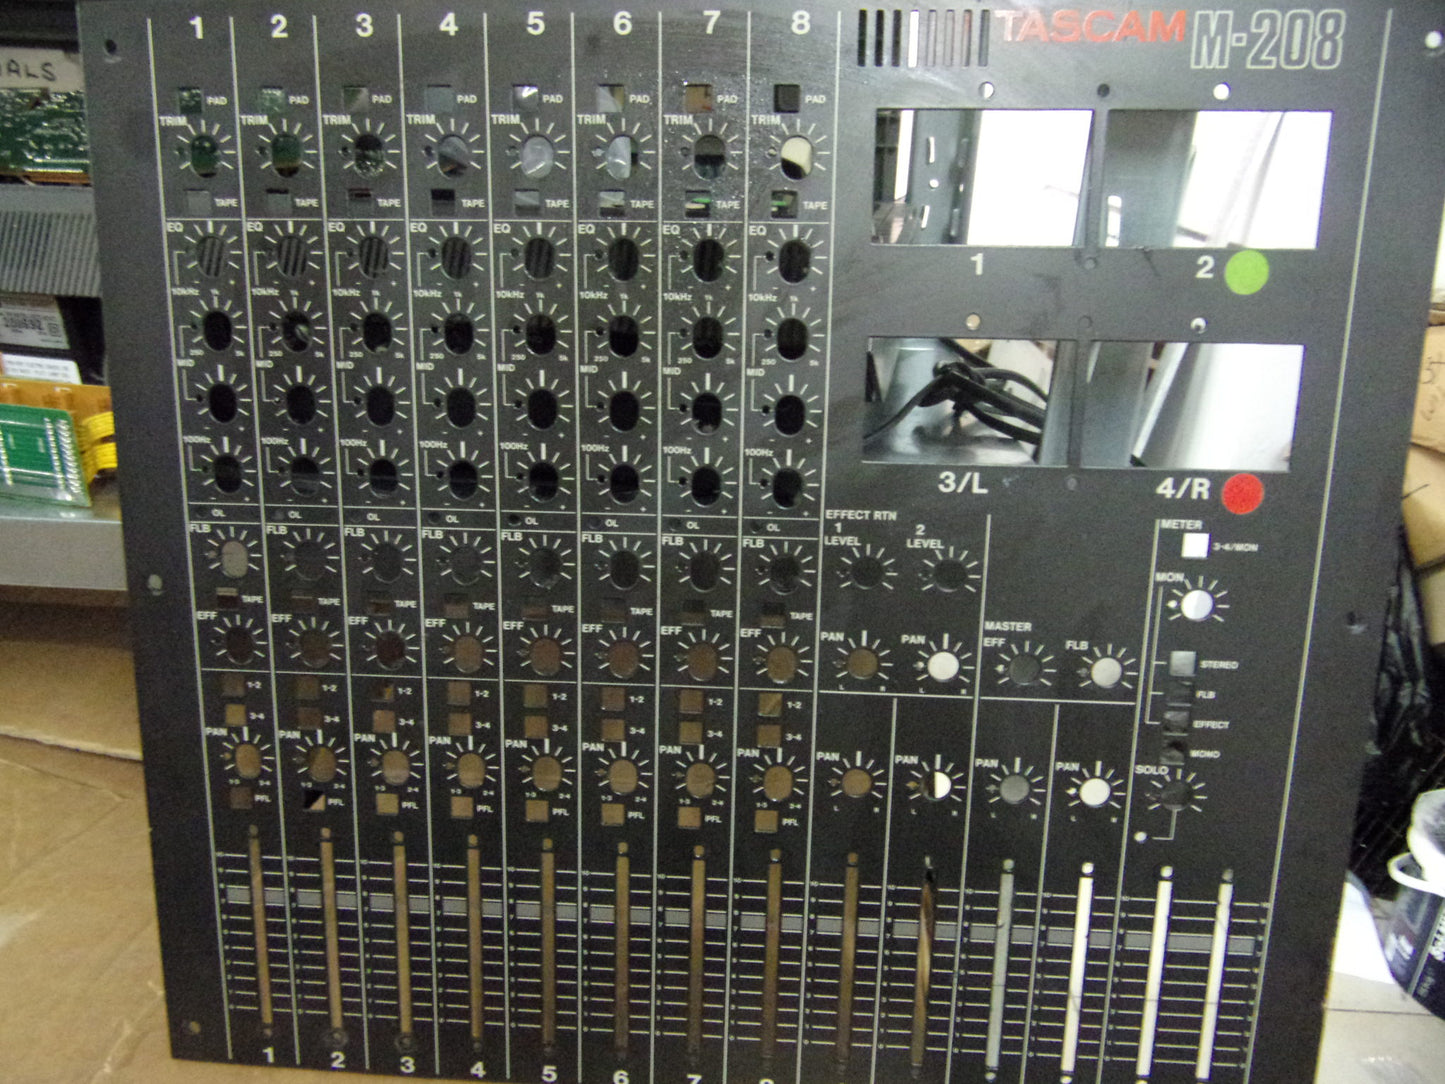 Tascam M-208 main top control panel